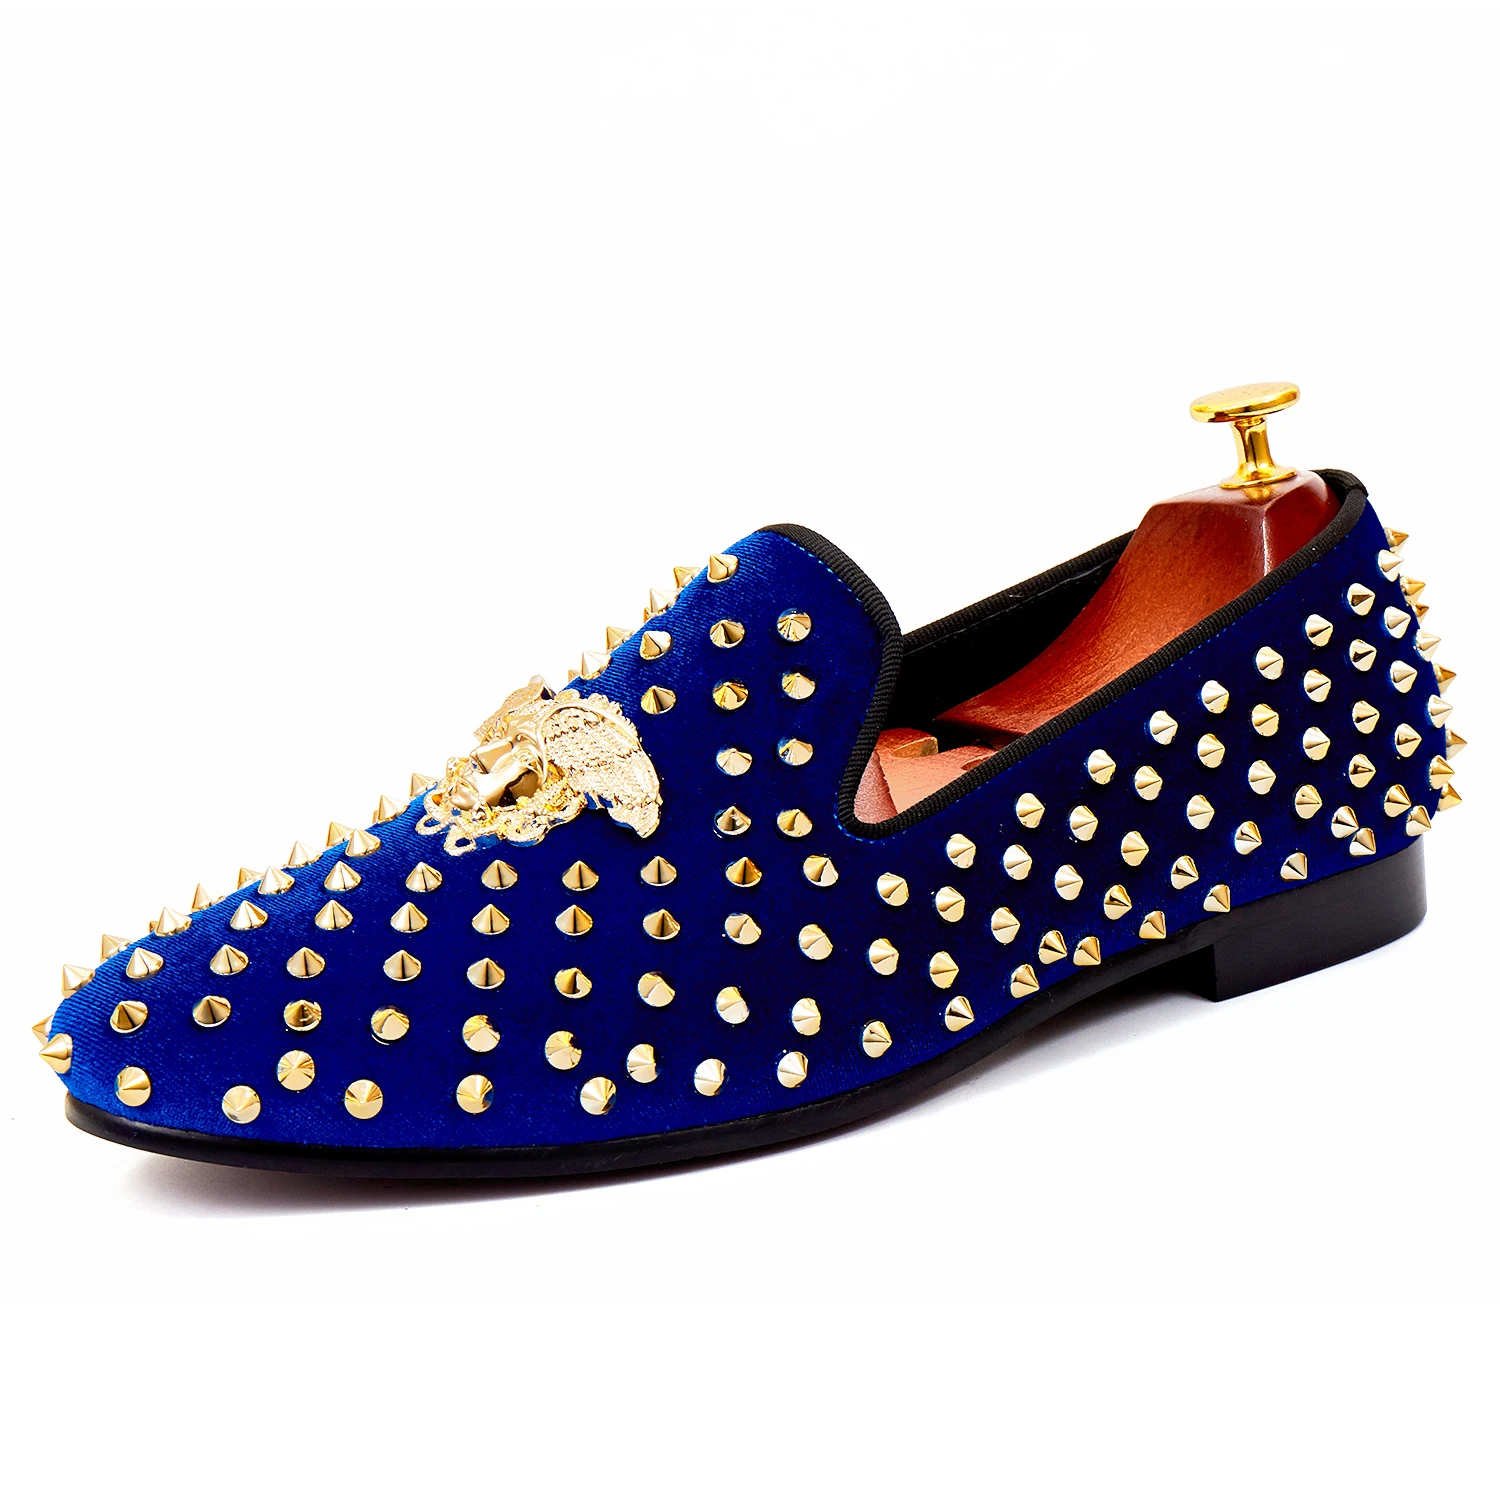 Harpelunde Brand Men Dress Shoes Rivet Blue Velvet Shoes Medusa Buckle Wedding Shoes Size 7-14